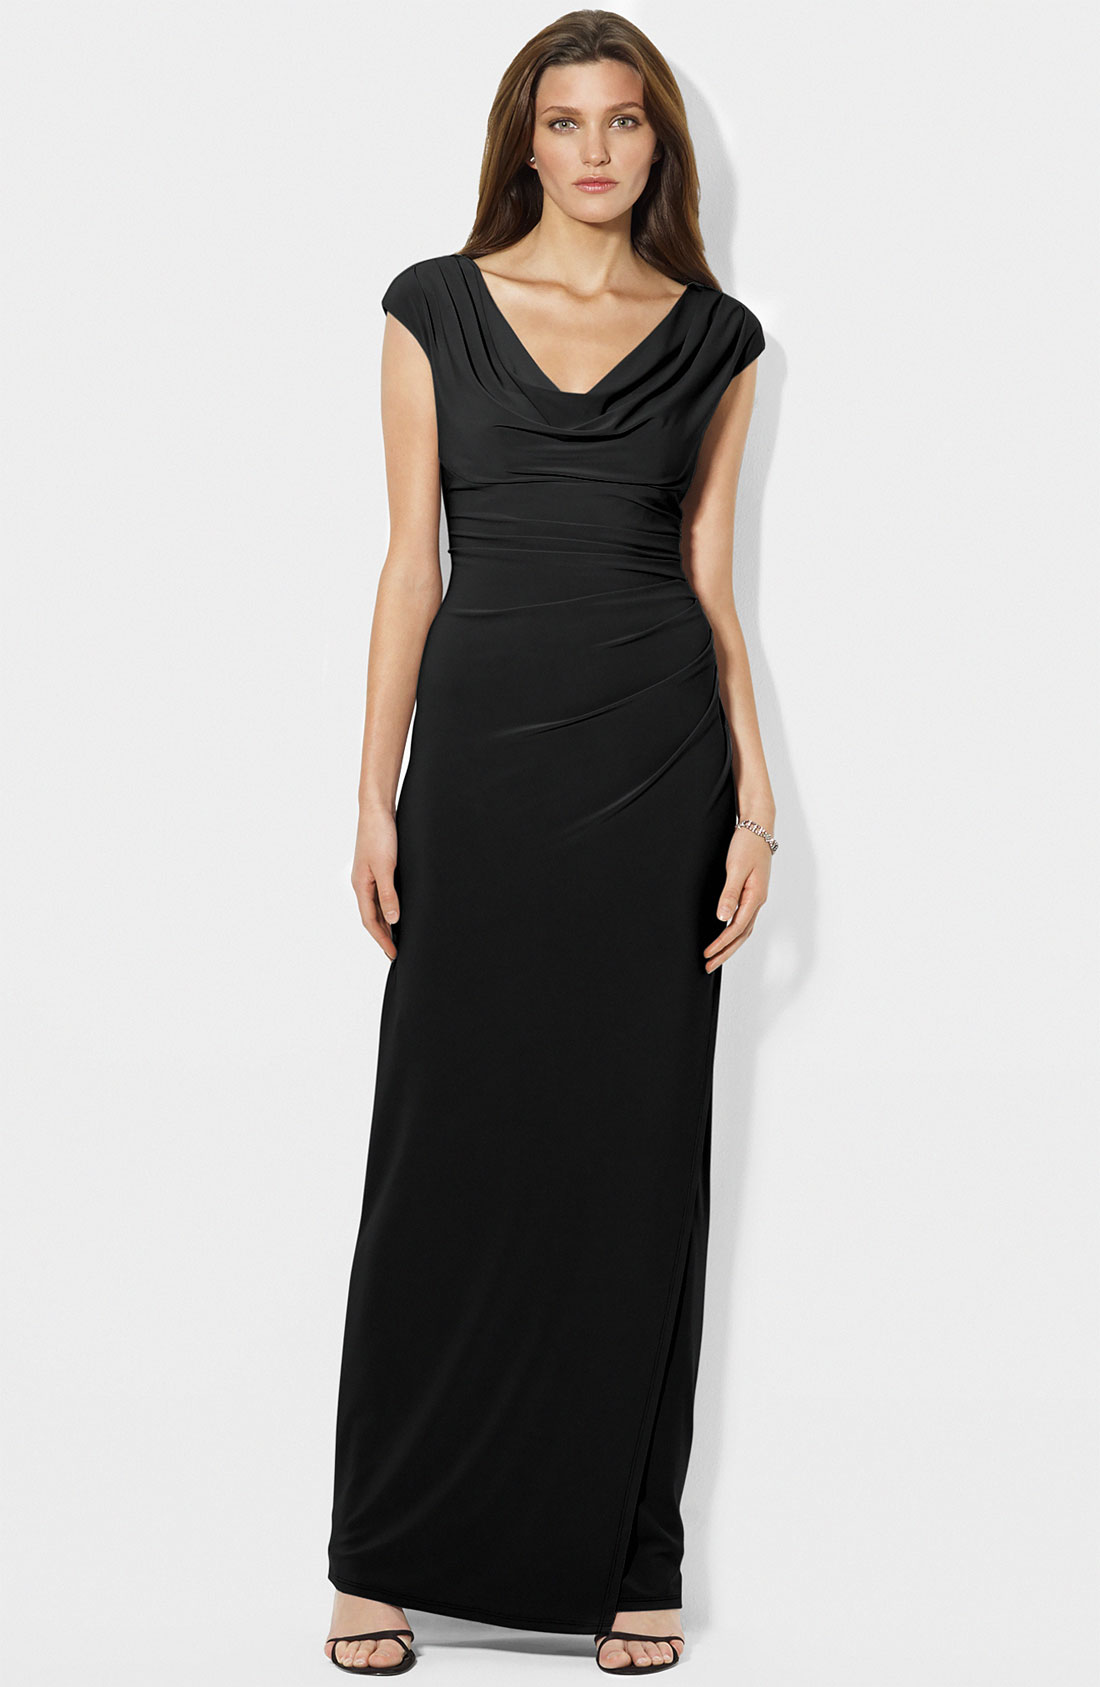 Lauren By Ralph Lauren Cowl Neck Ruched Jersey Gown in Black | Lyst